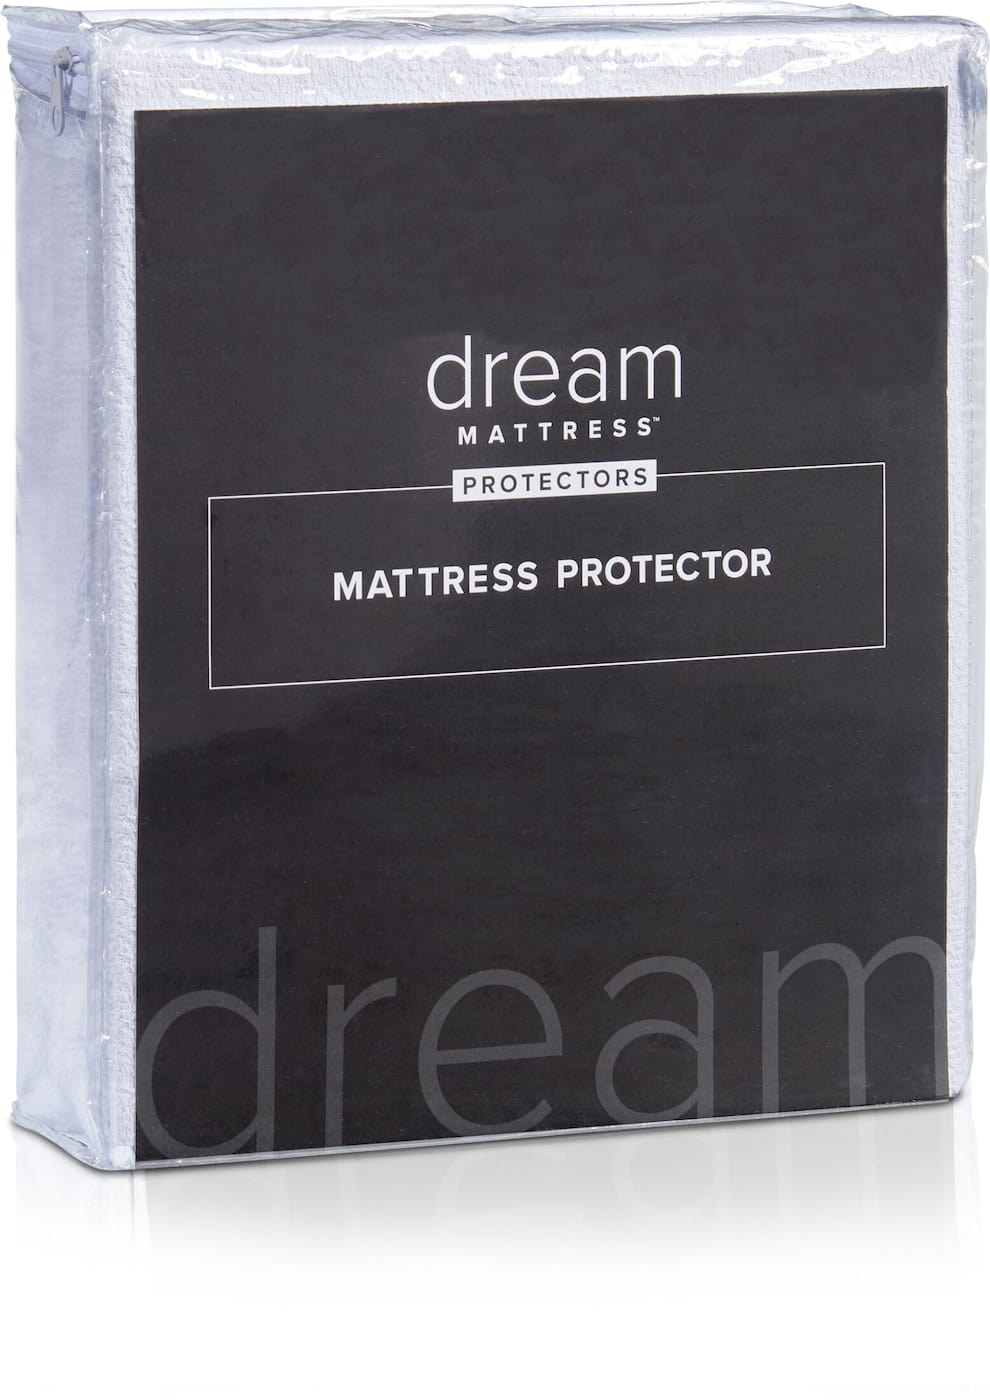 dream mattress accessories mattresses and bedding main image  